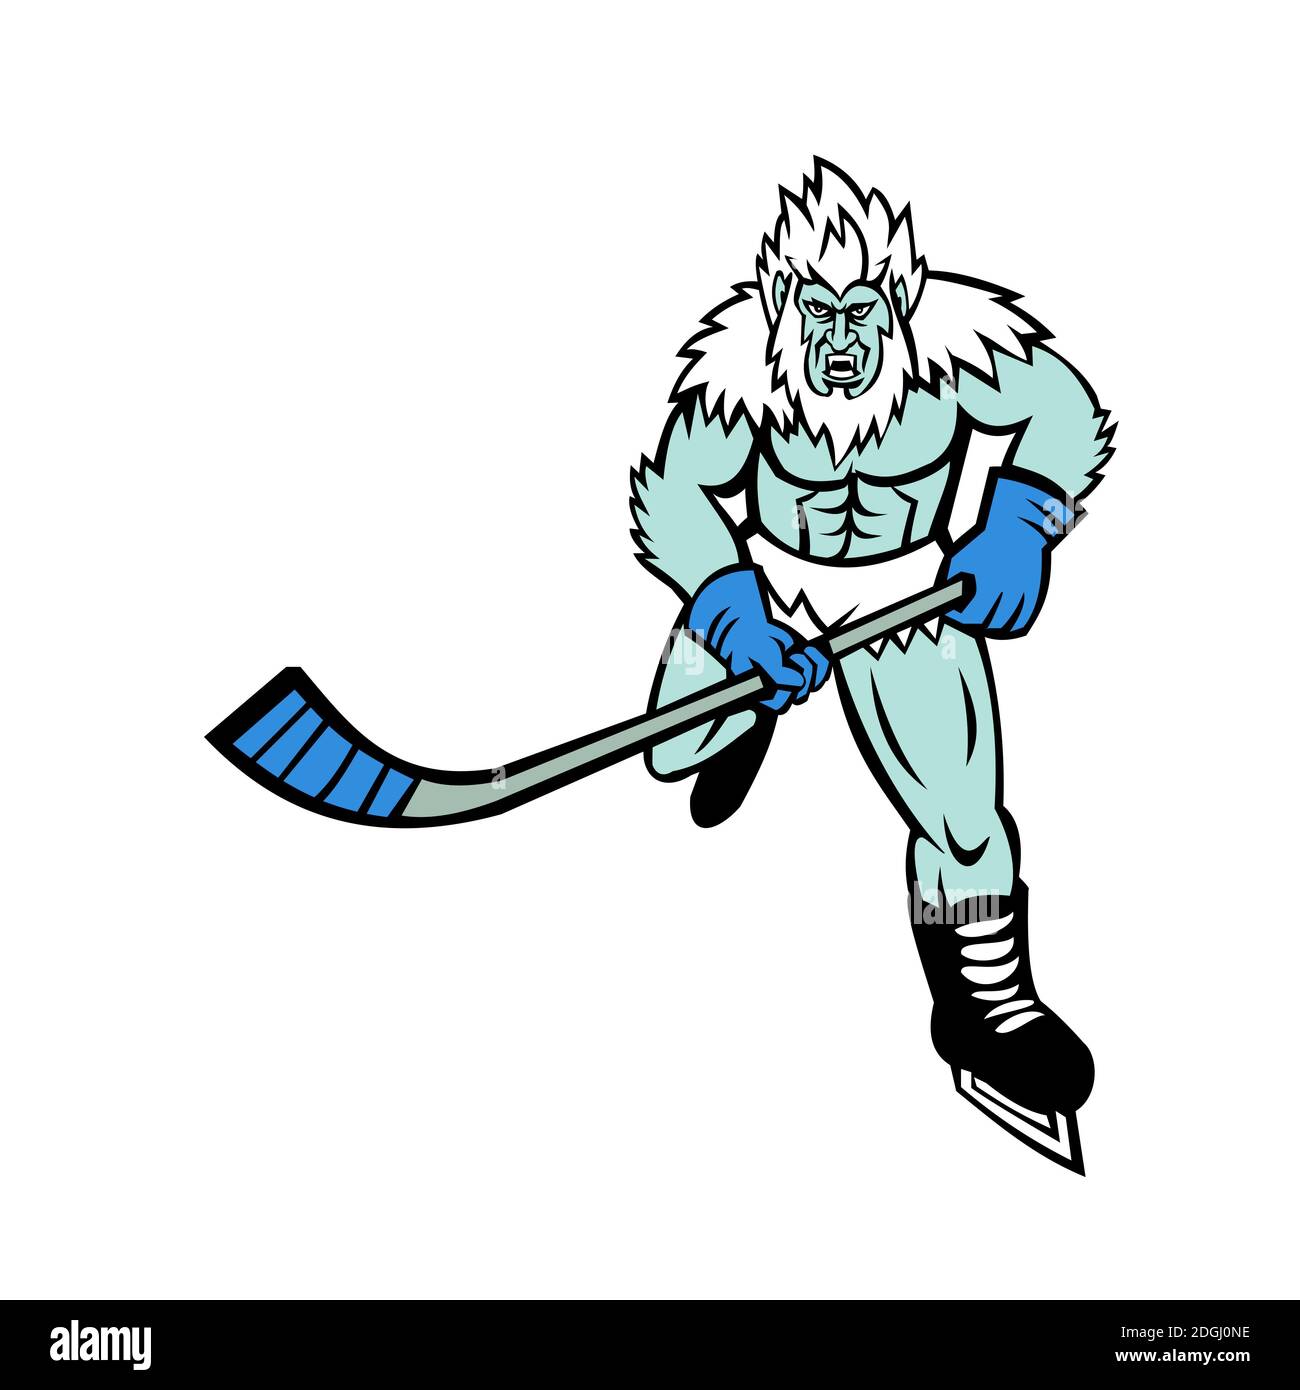 Abominable Snowman Ice Hockey Player Mascot Stock Photo